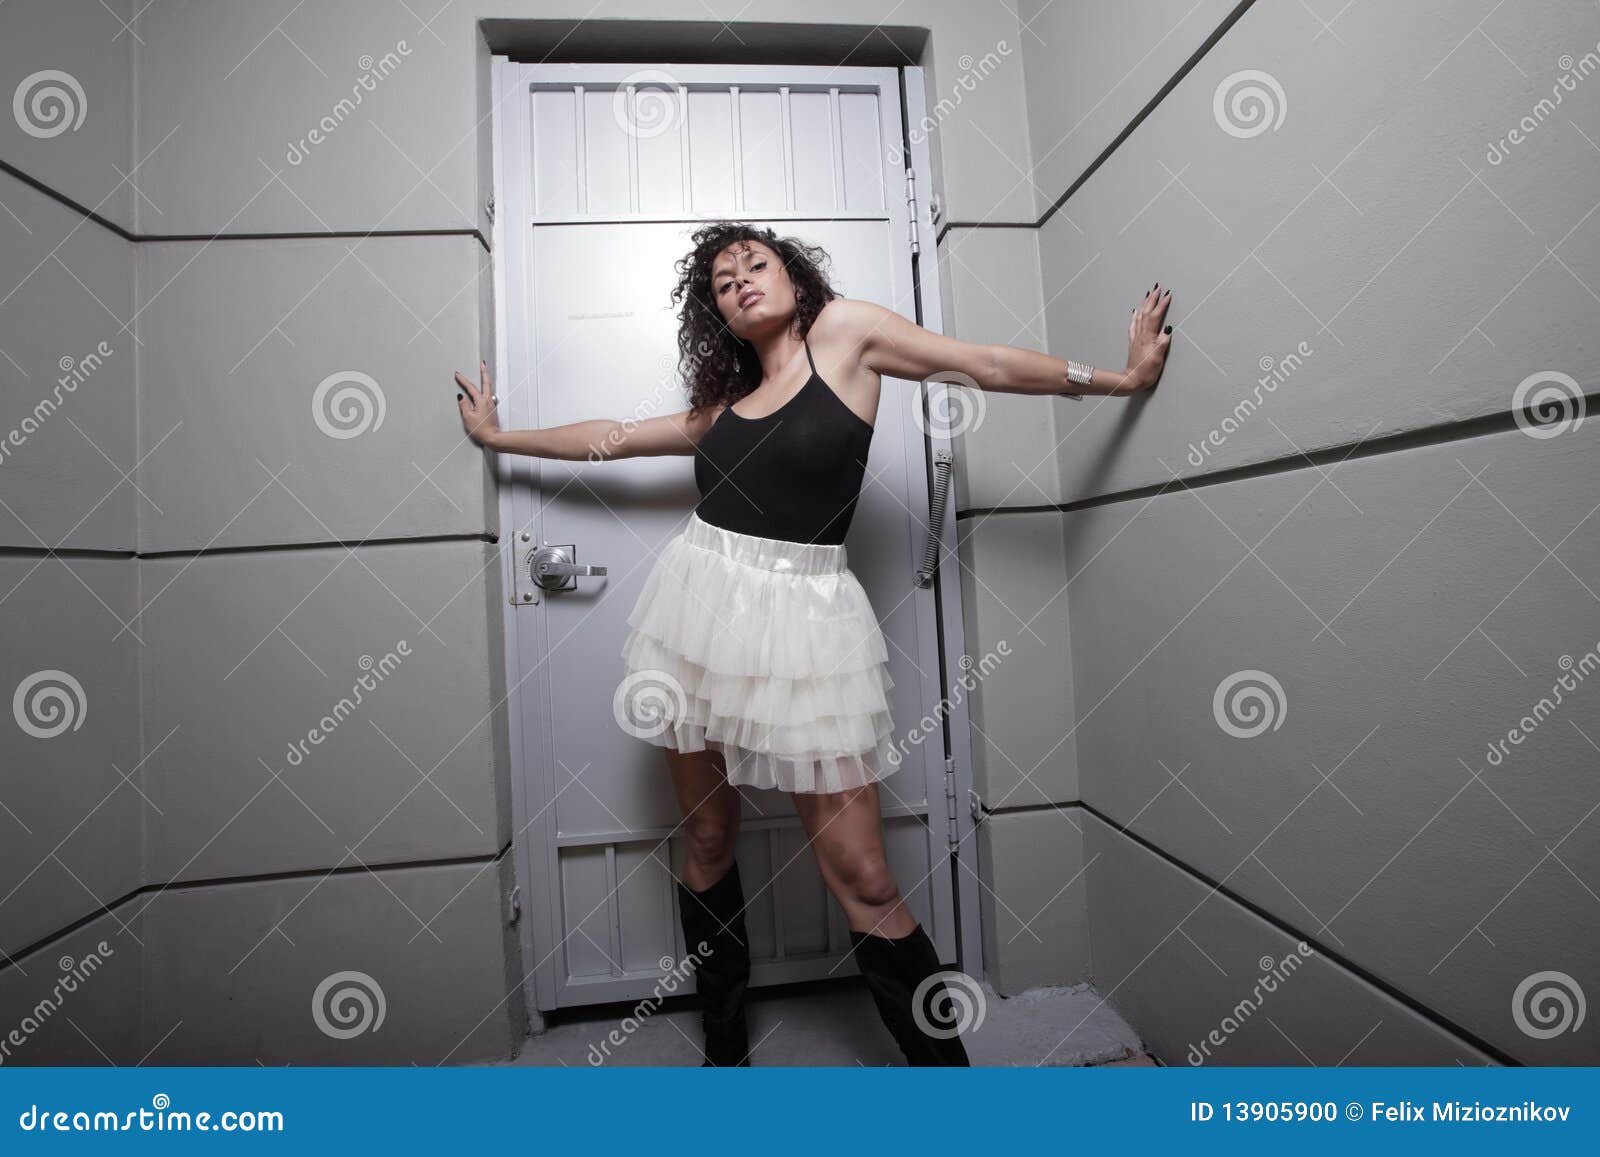 Woman Blocking The Door Stock Photo - Image: 13905900